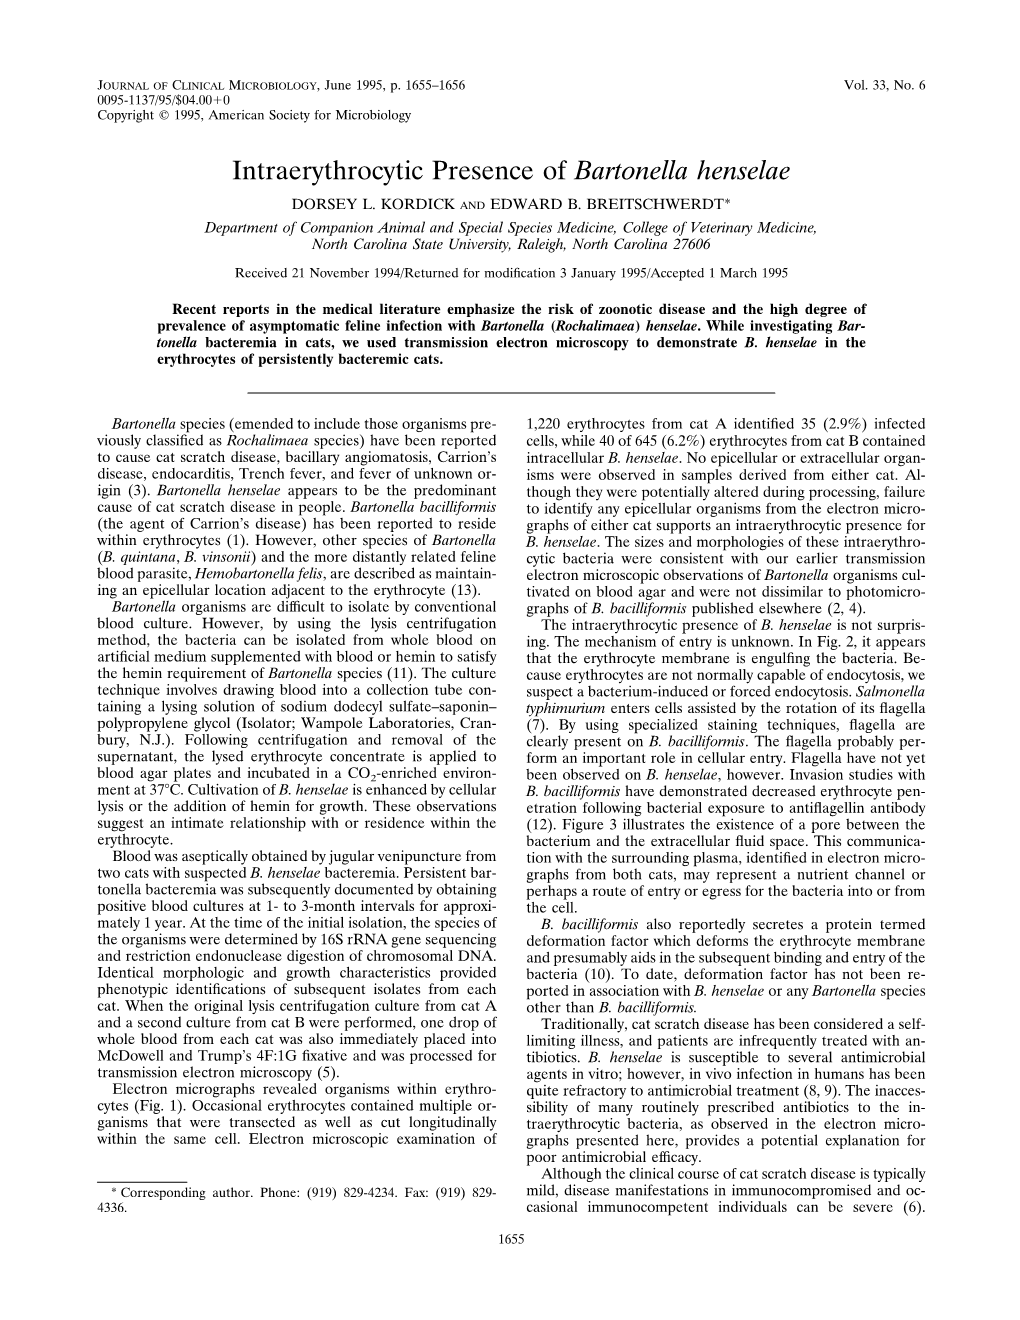 Intraerythrocytic Presence of Bartonella Henselae